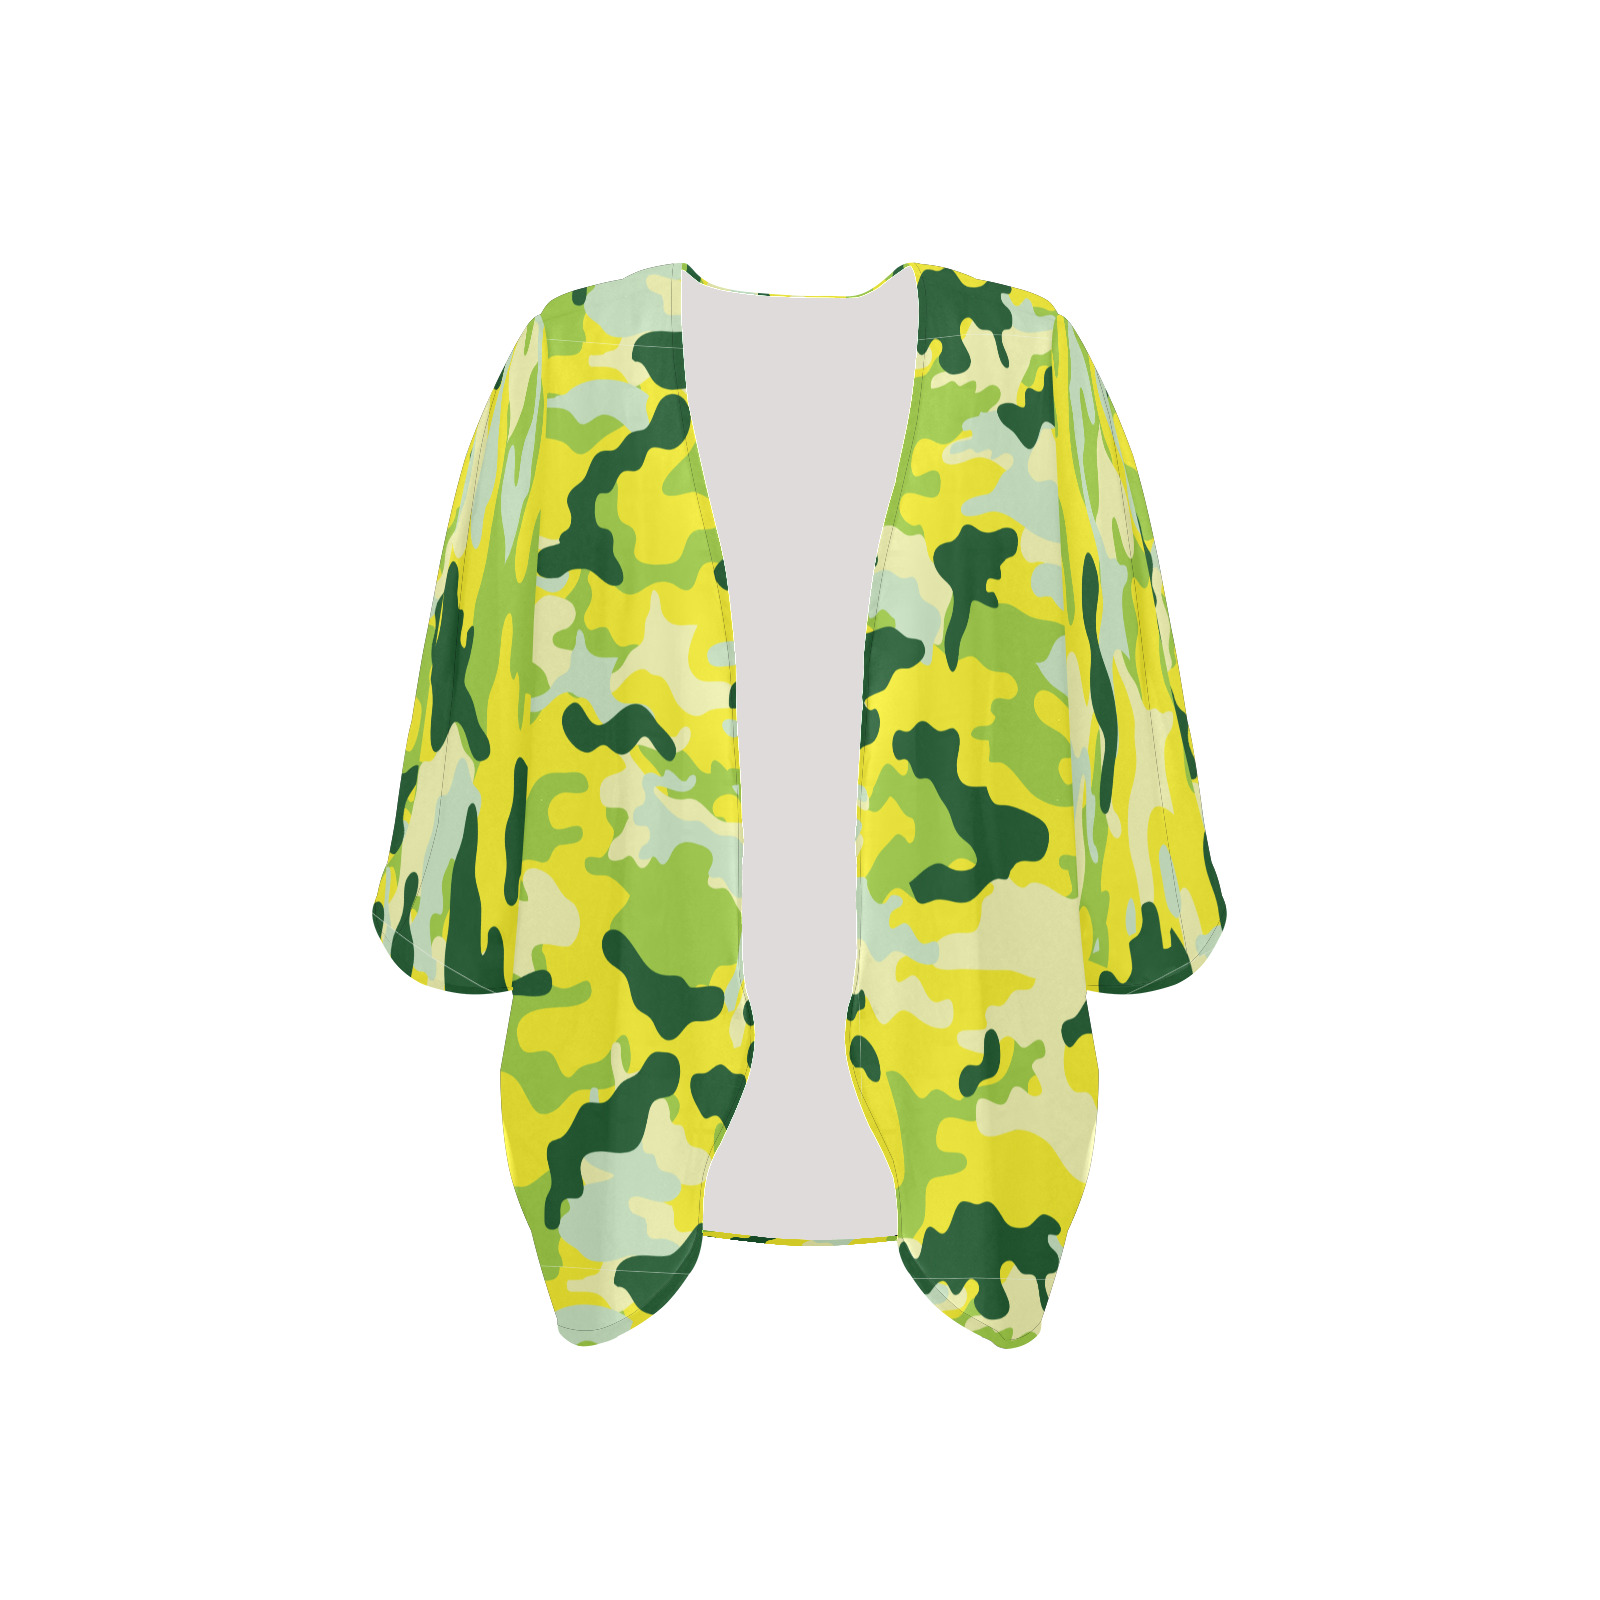 Streetwear Fashion Military Modern Army Camouflage Women's Kimono Chiffon Cover Ups (Model H51)